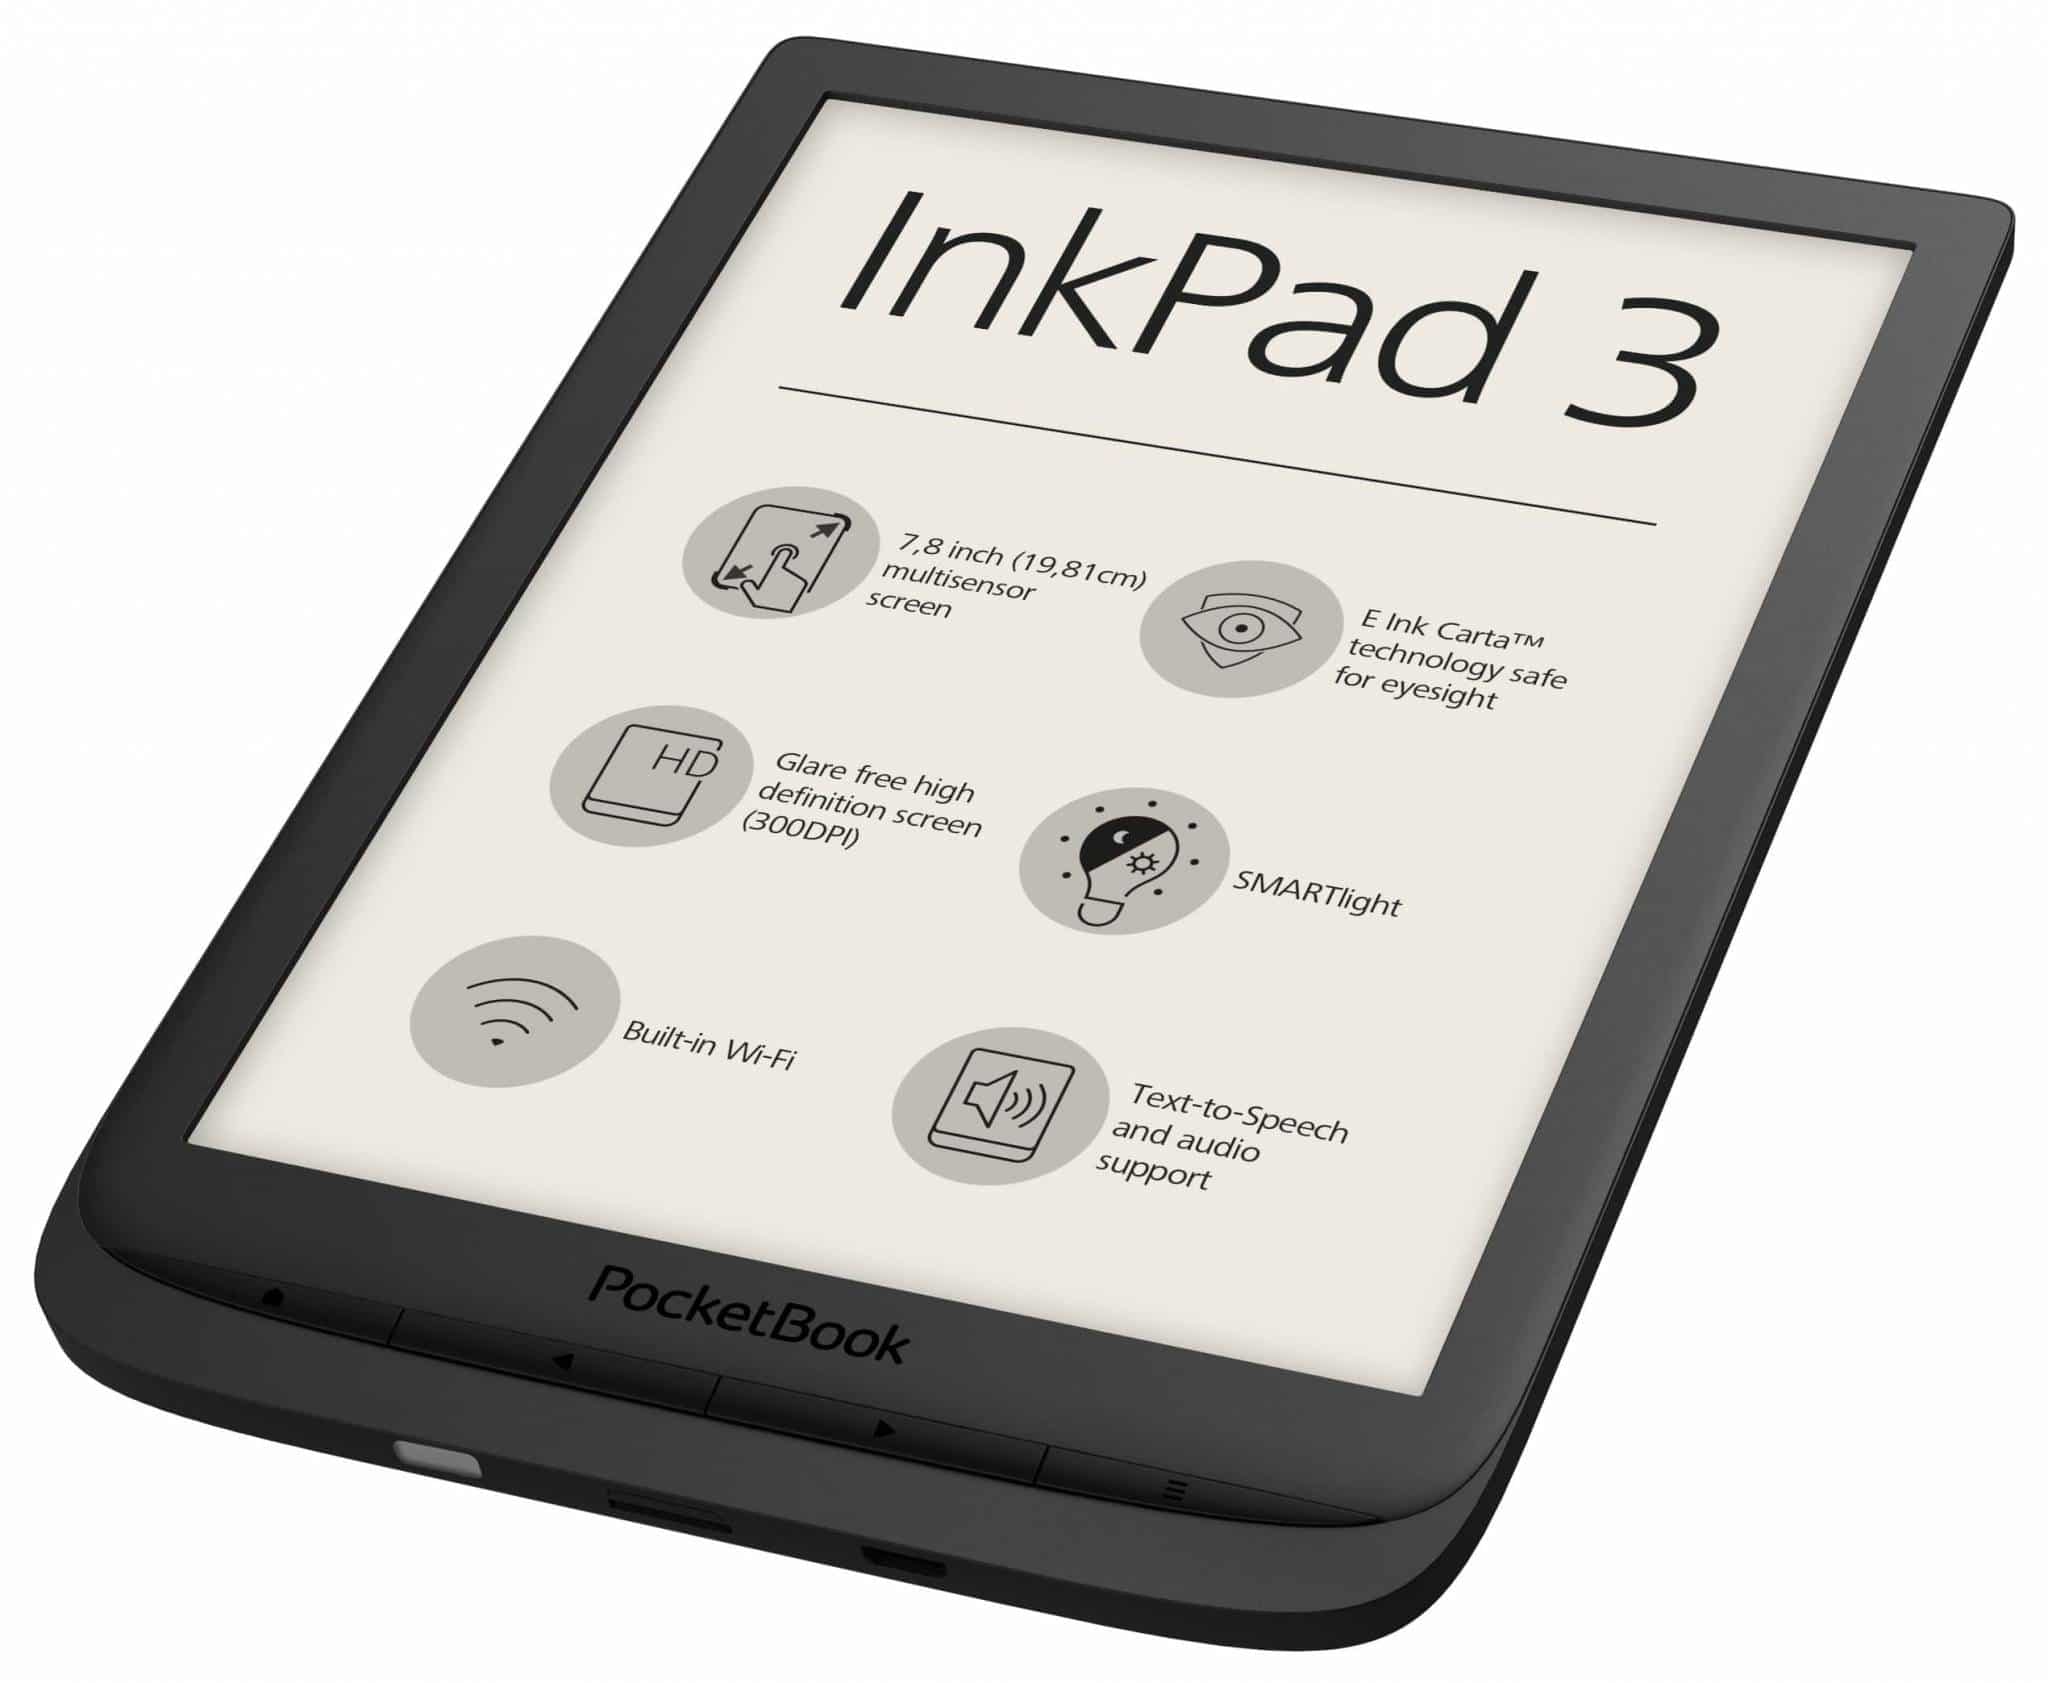 Buy the Pocketbook Inkpad 3 - e-Reader Good